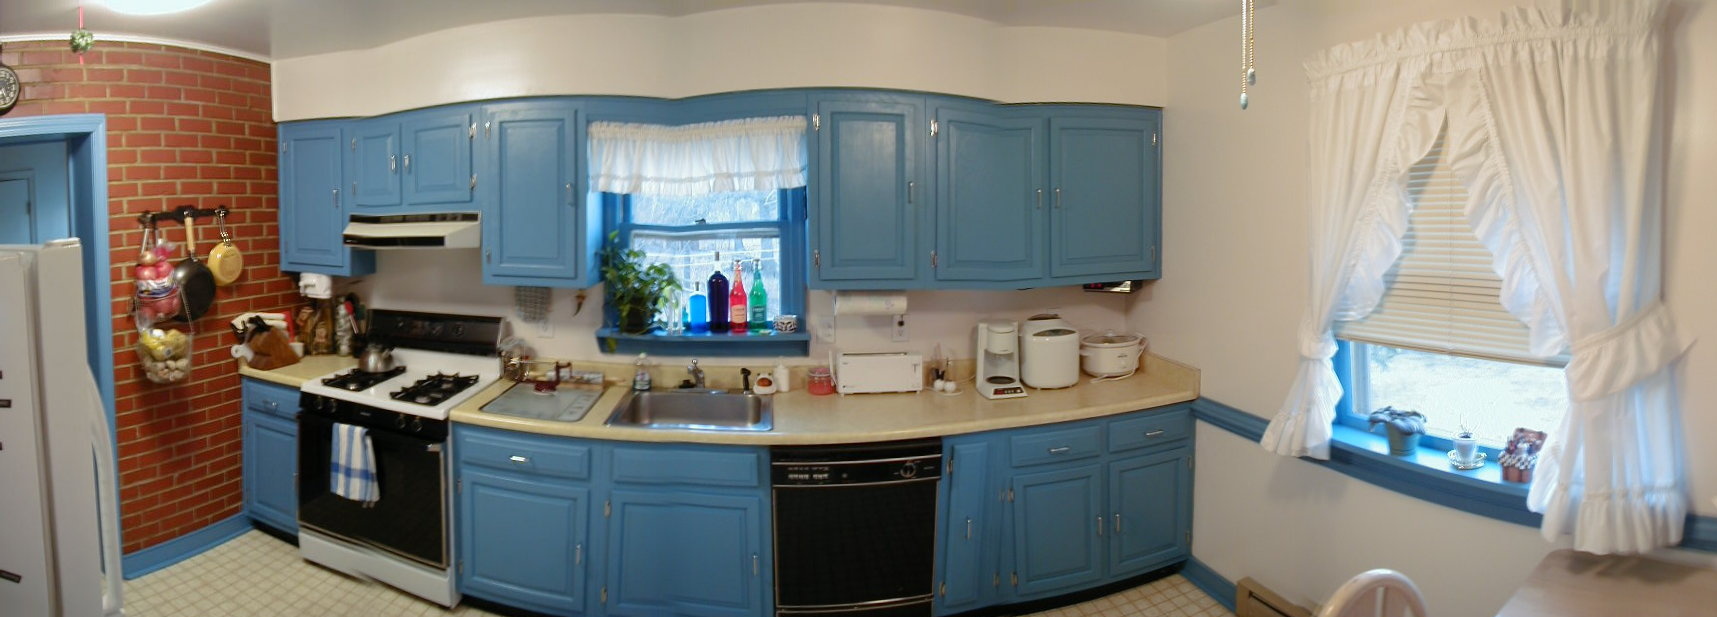 blue kitchen representation